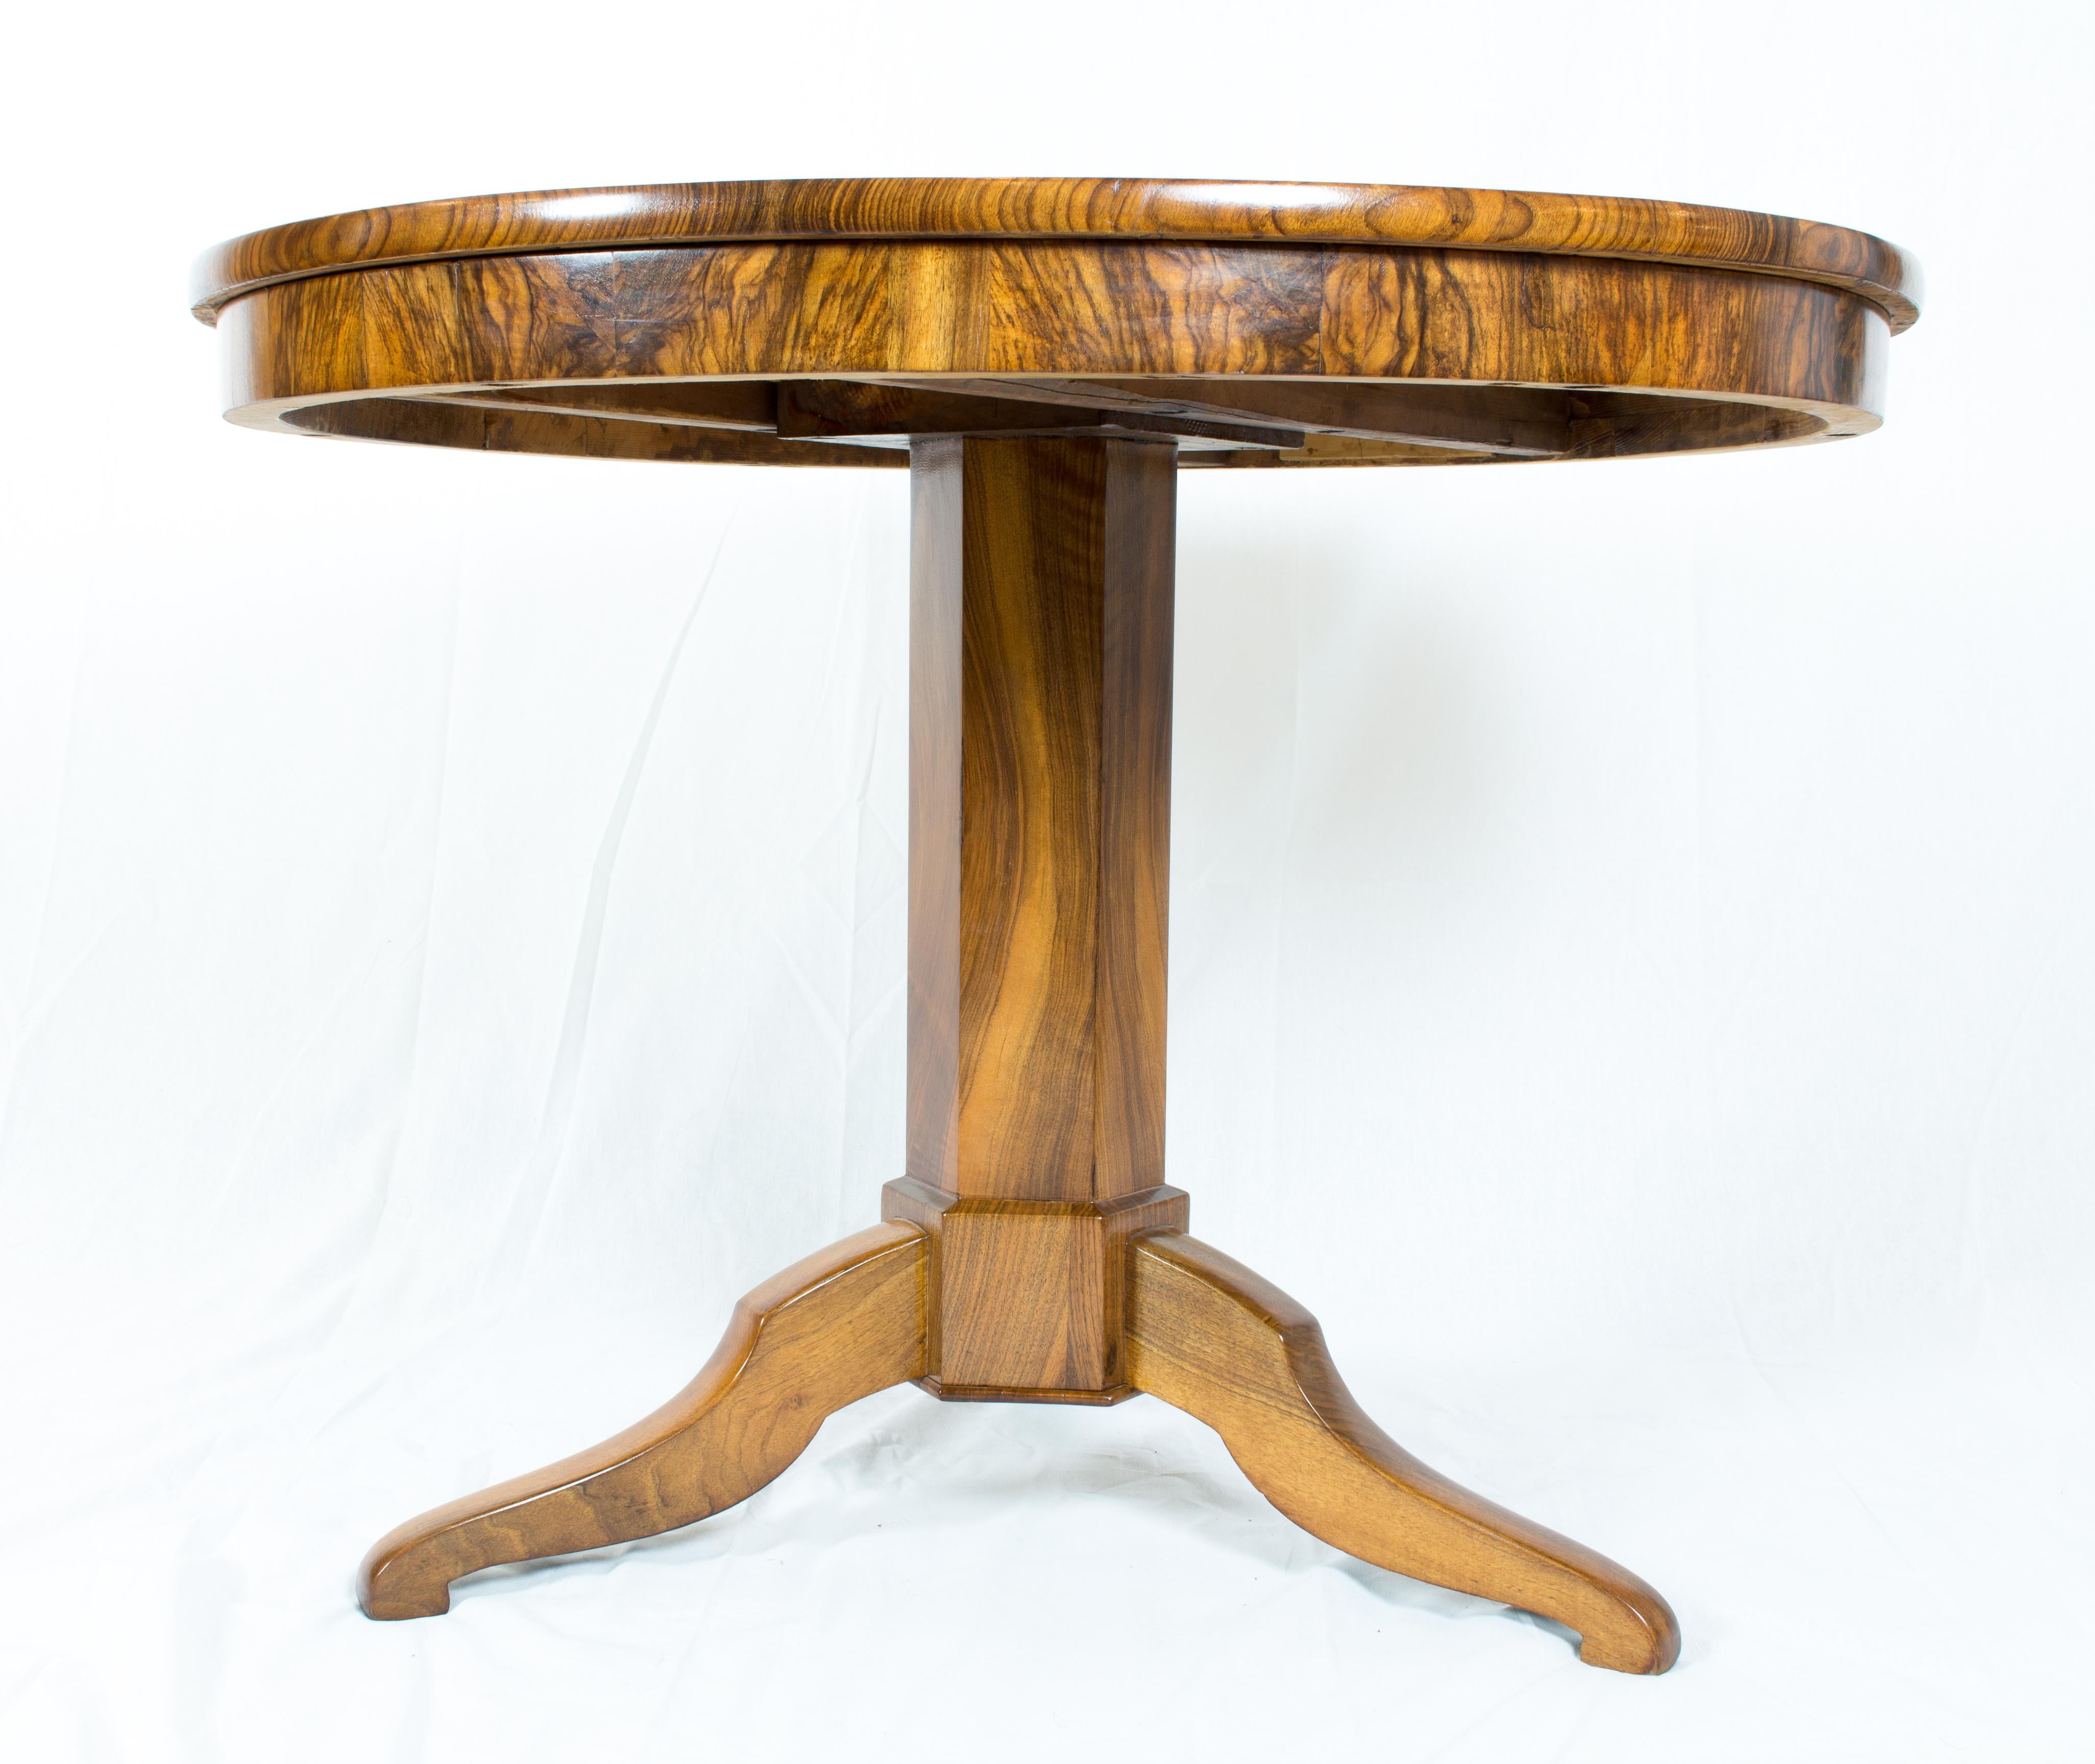 Polished 19th Century Biedermeier Round Walnut Table